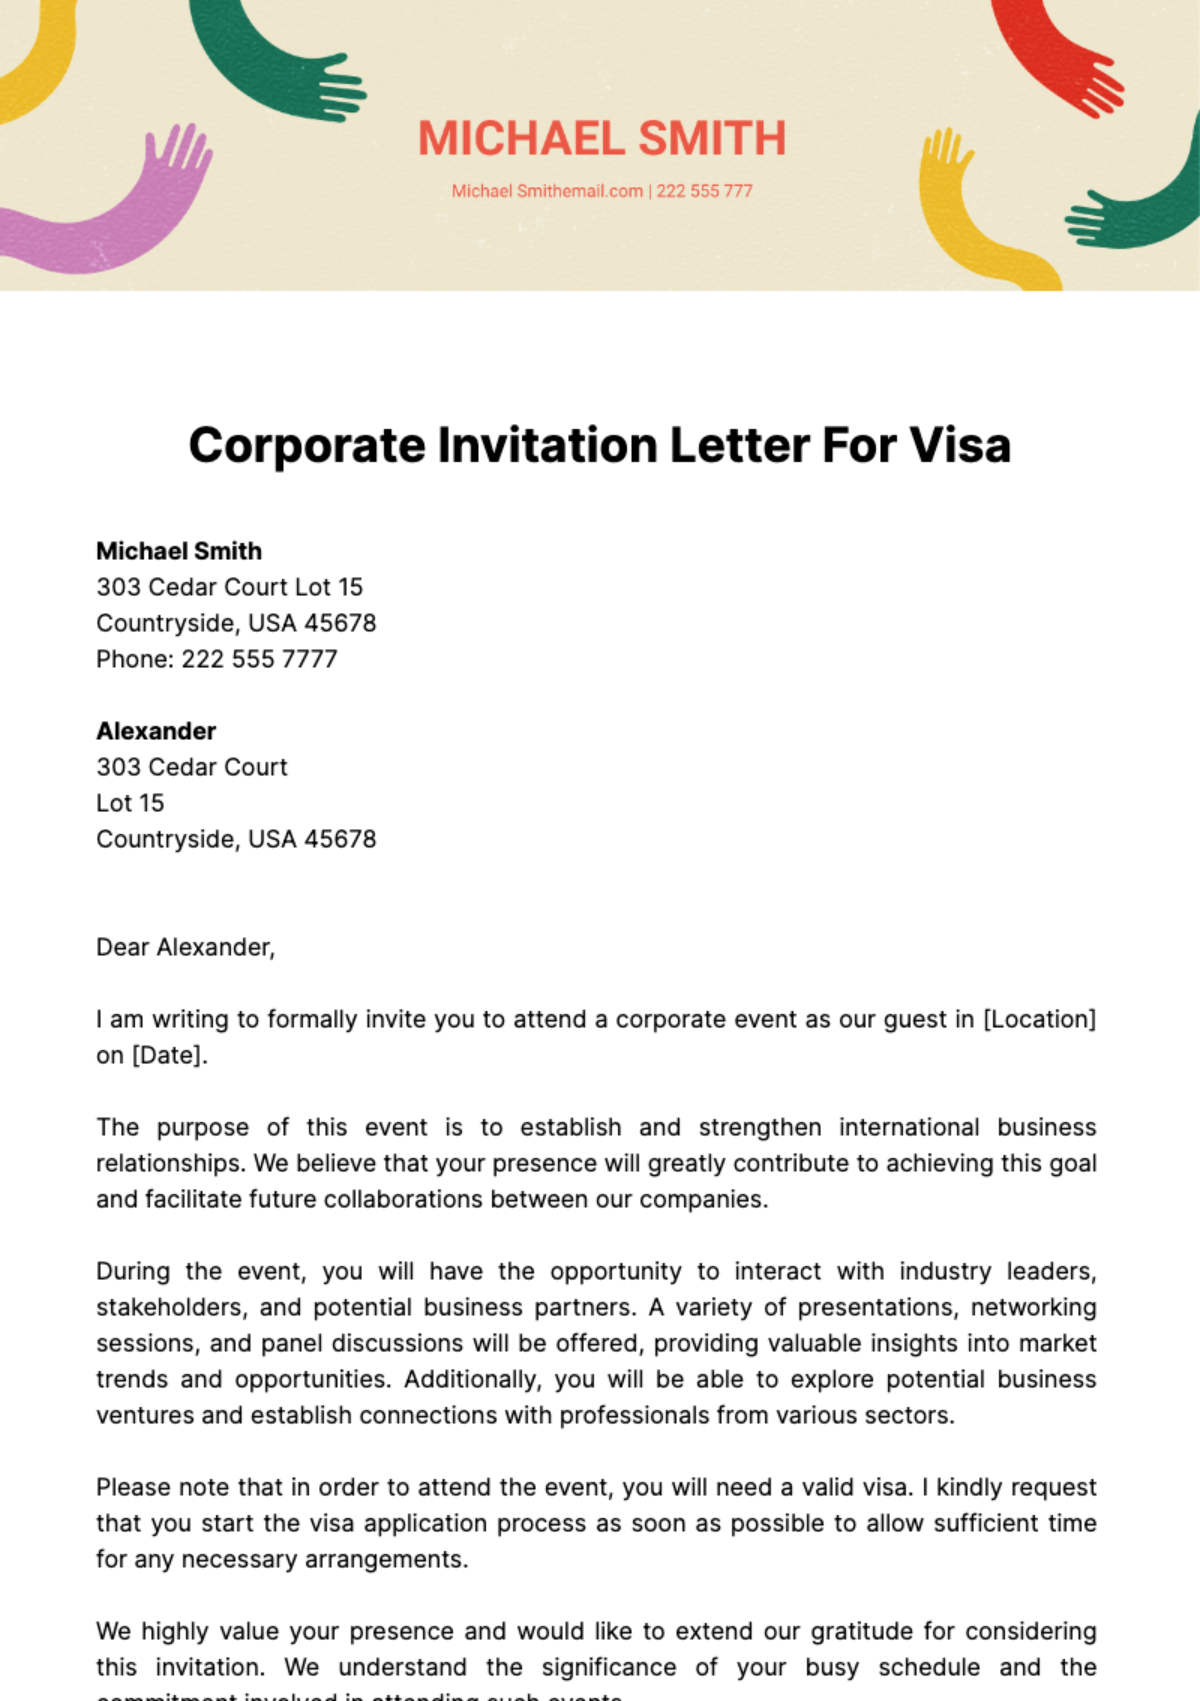 Free Corporate Invitation Letter For Visa Template